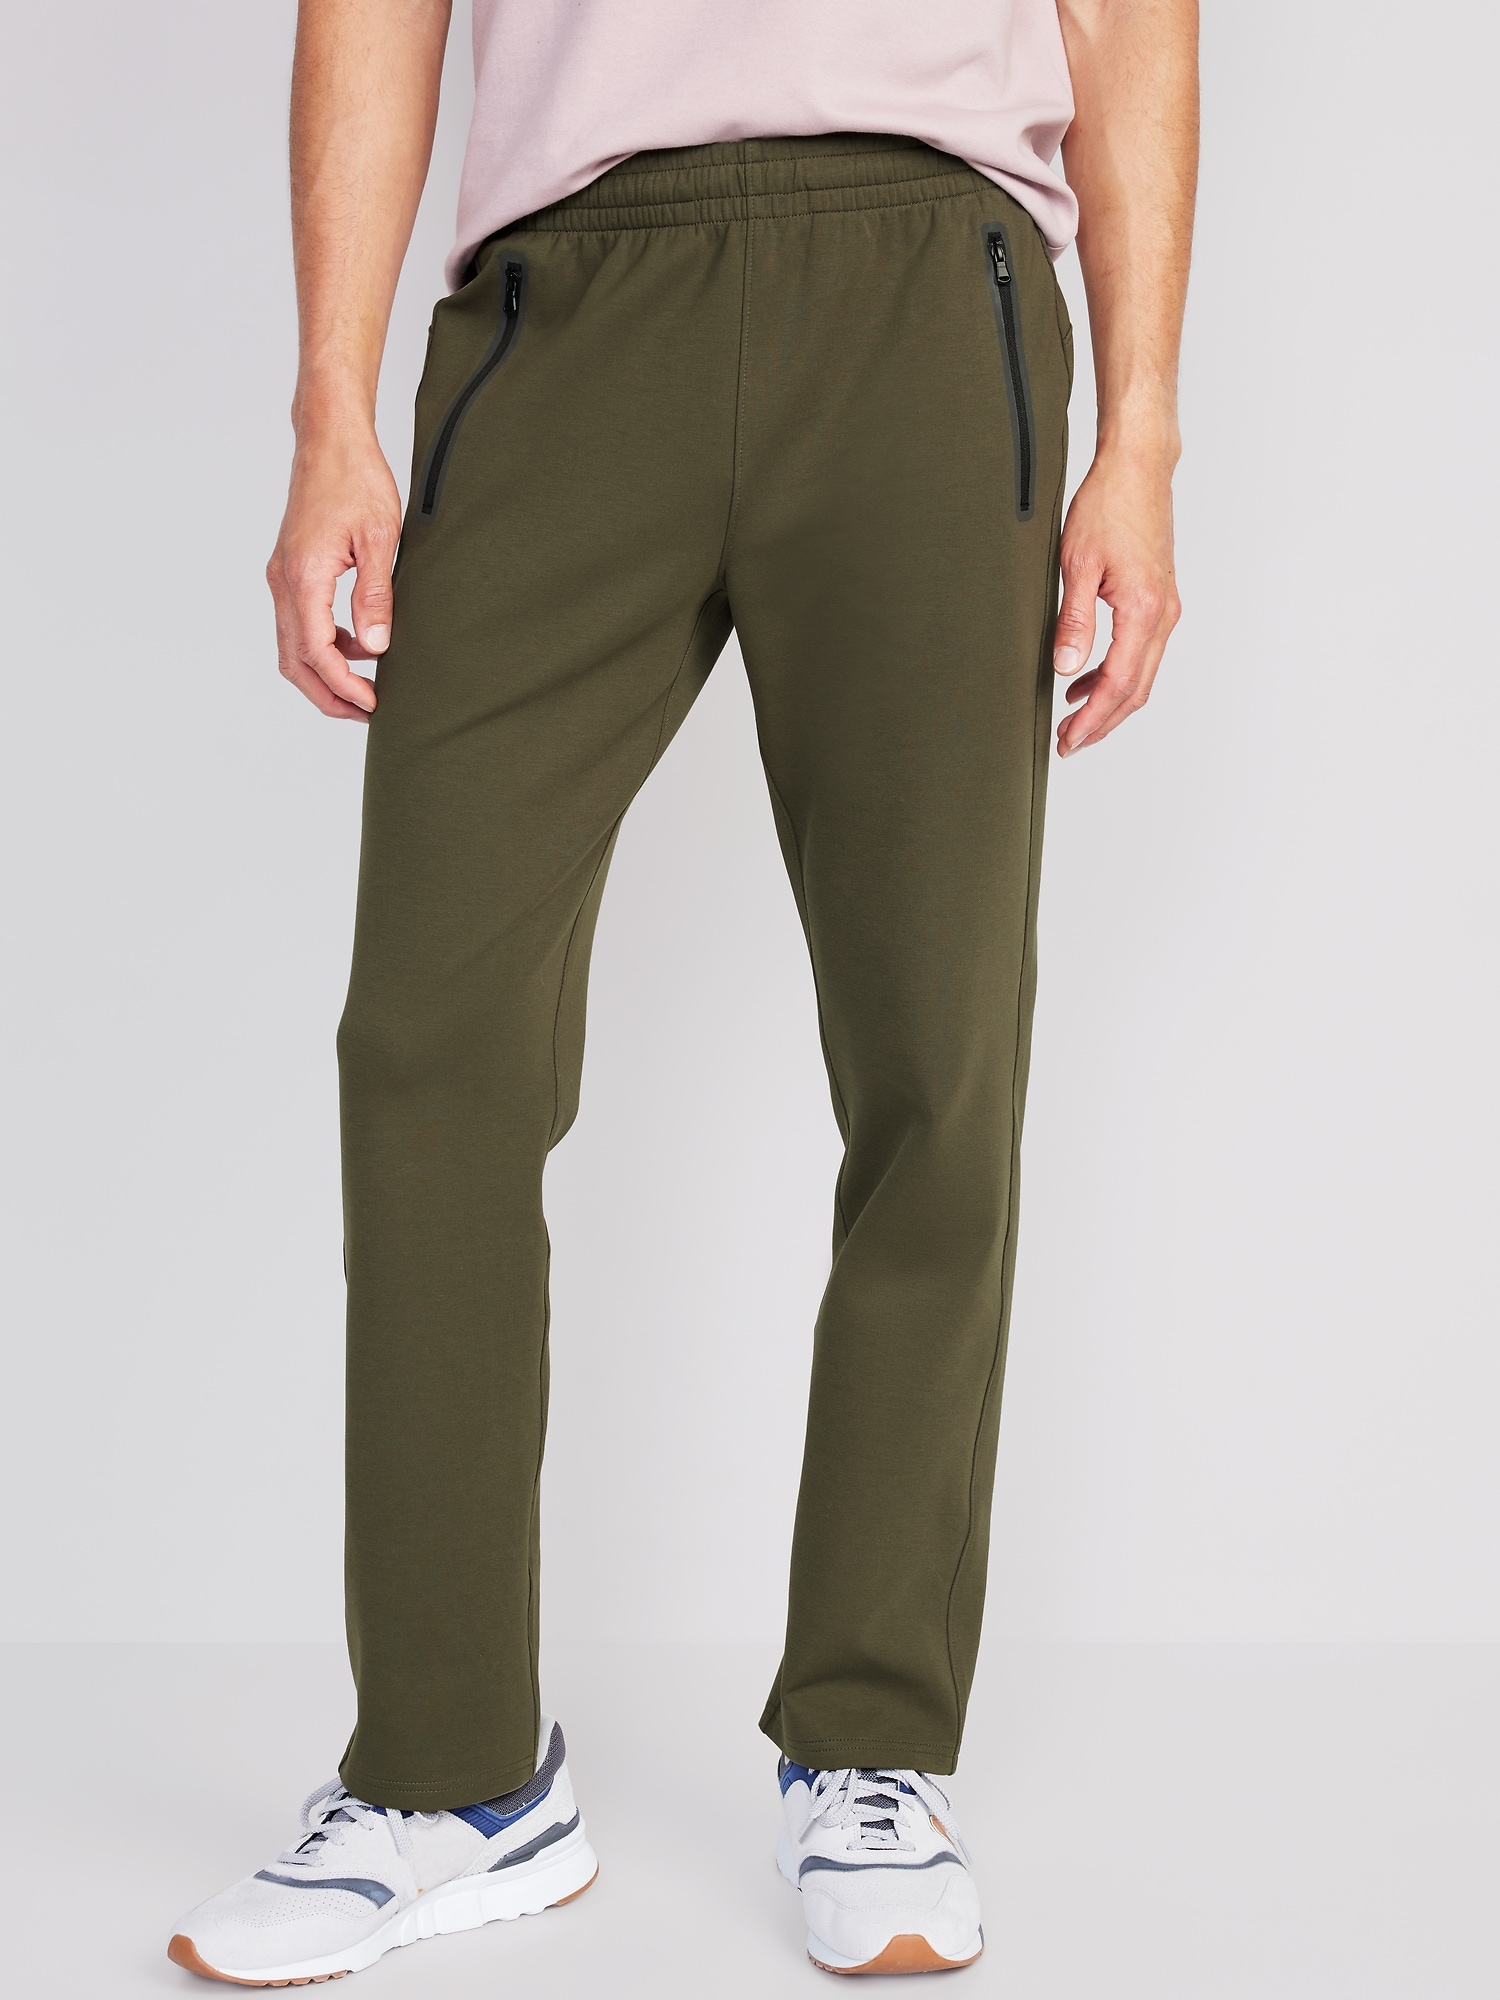 Men's Old Navy Dynamic Fleece Tapered-Fit Sweatpants (s)